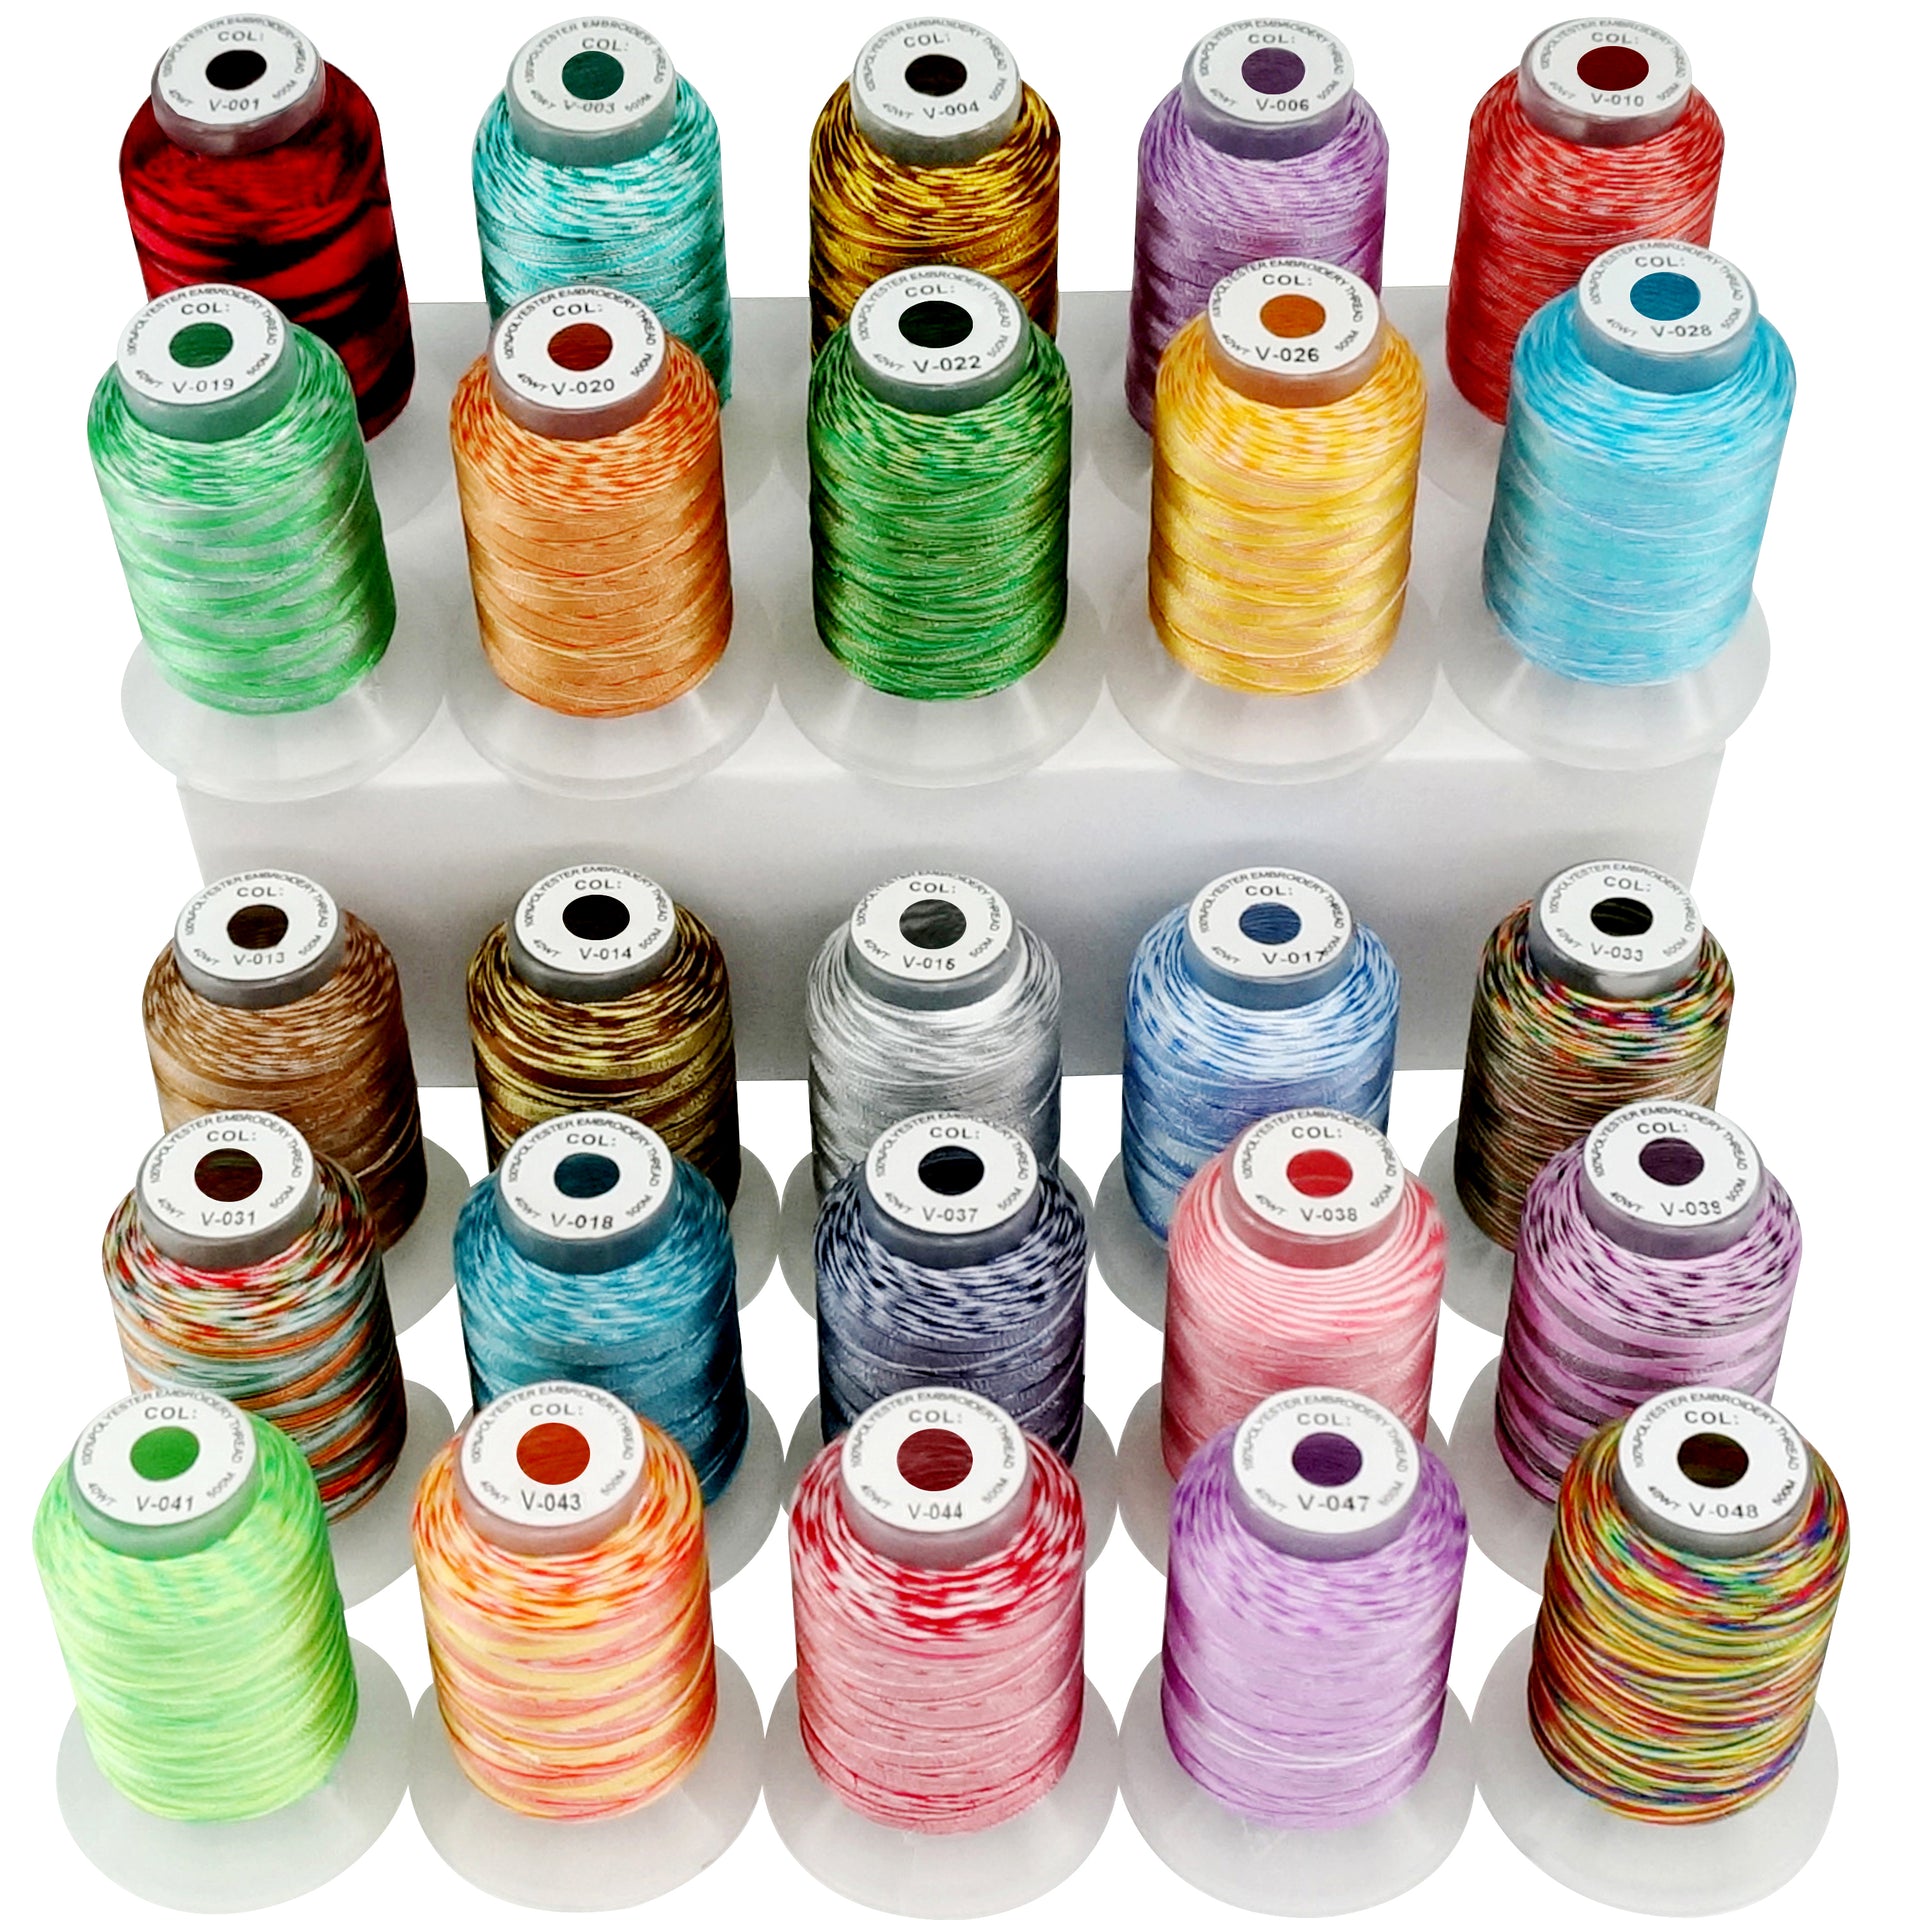 New brothread 4 Spools Reflective Embroidery Machine Thread (3 White +